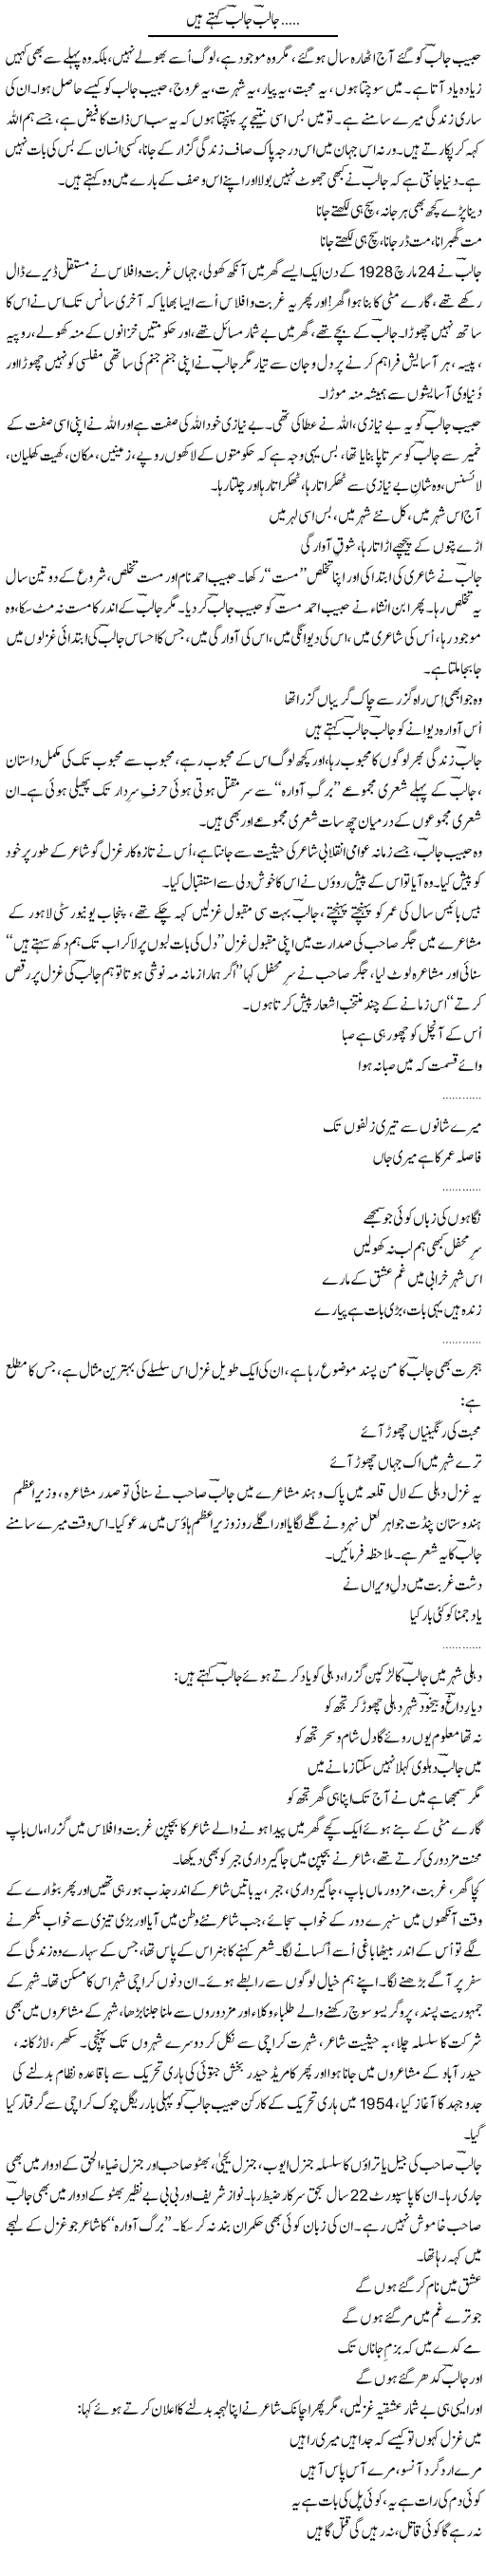 Habib Jalib Express Column Saeed Pervez 20 March 2011